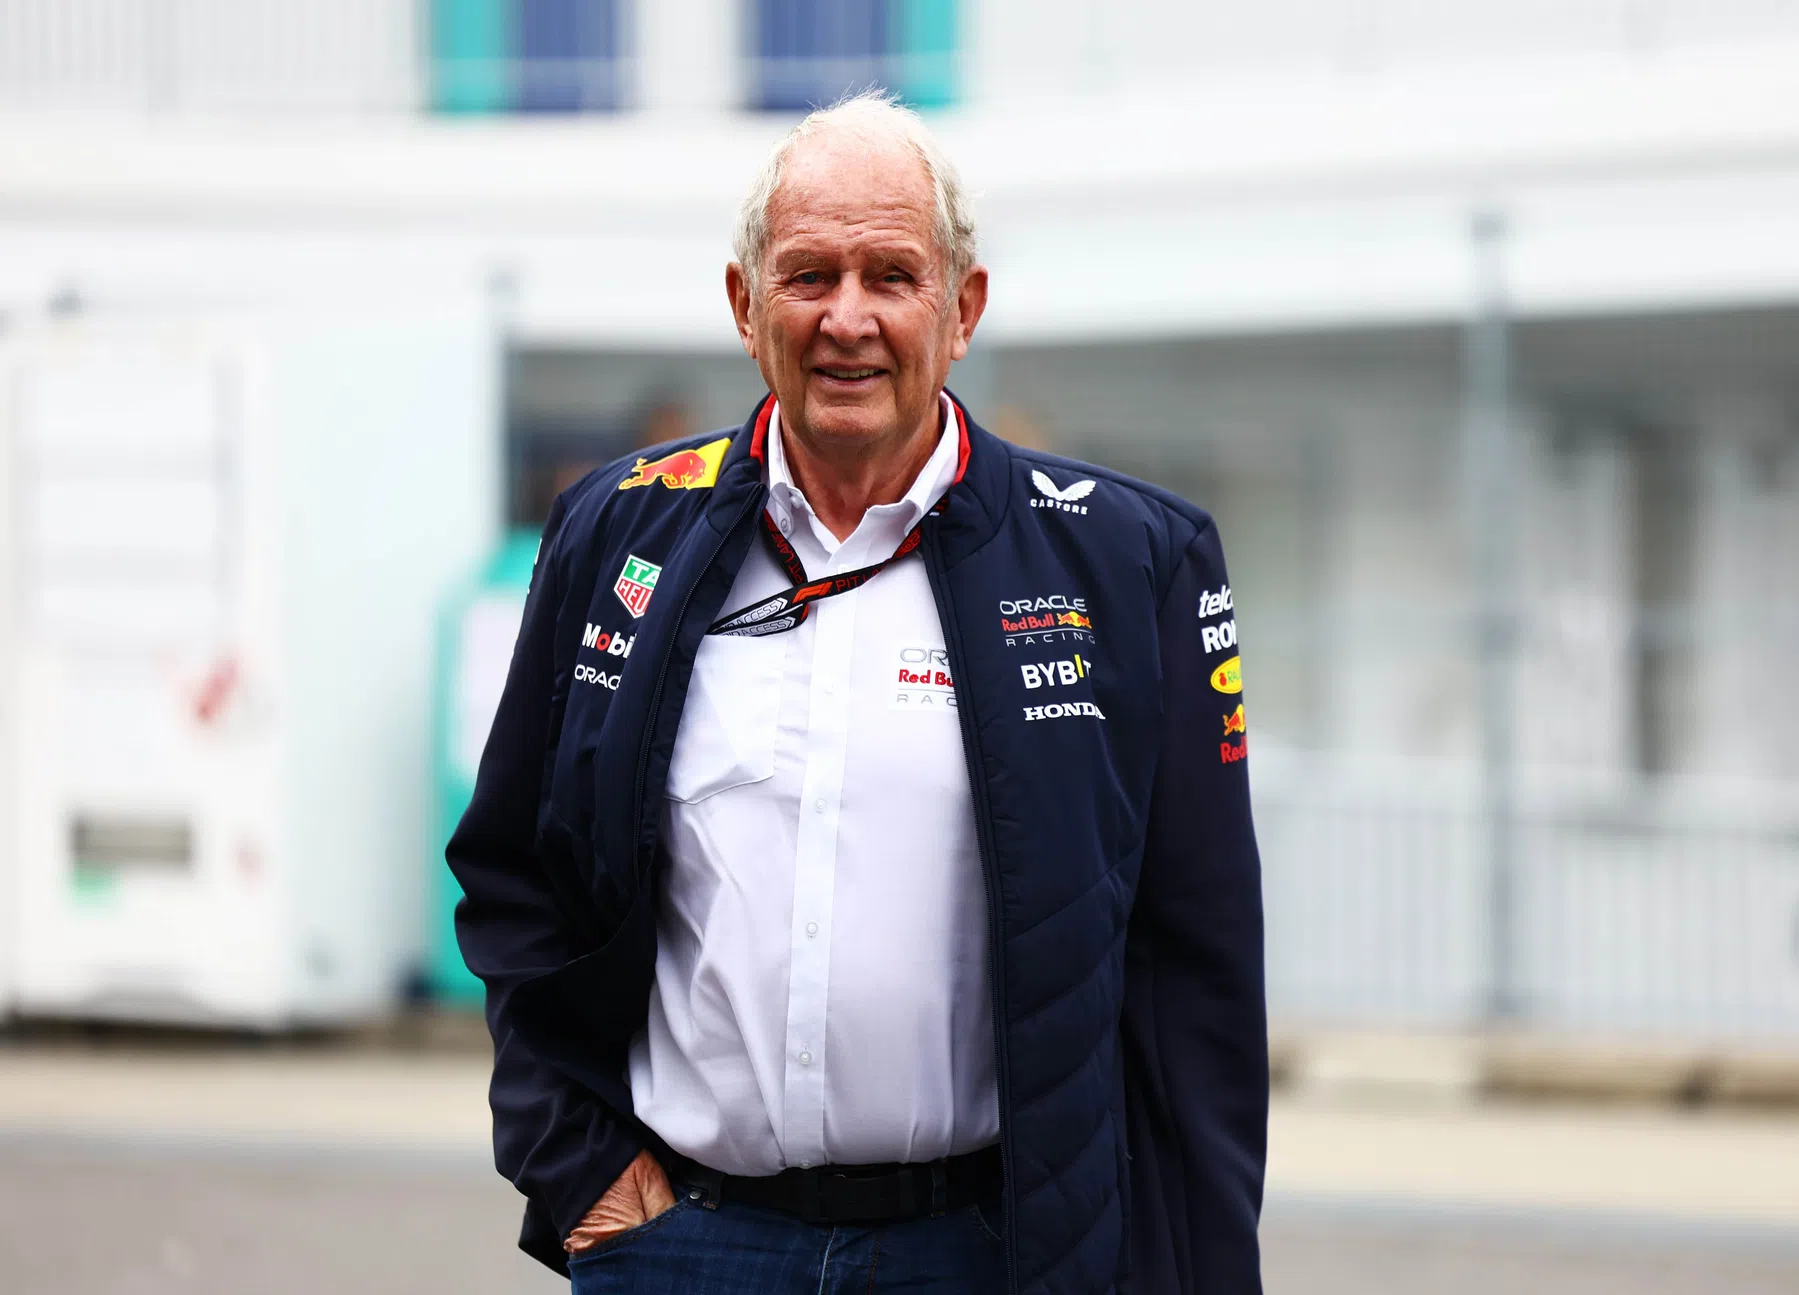 Marko garante permanência de Verstappen na Red Bull